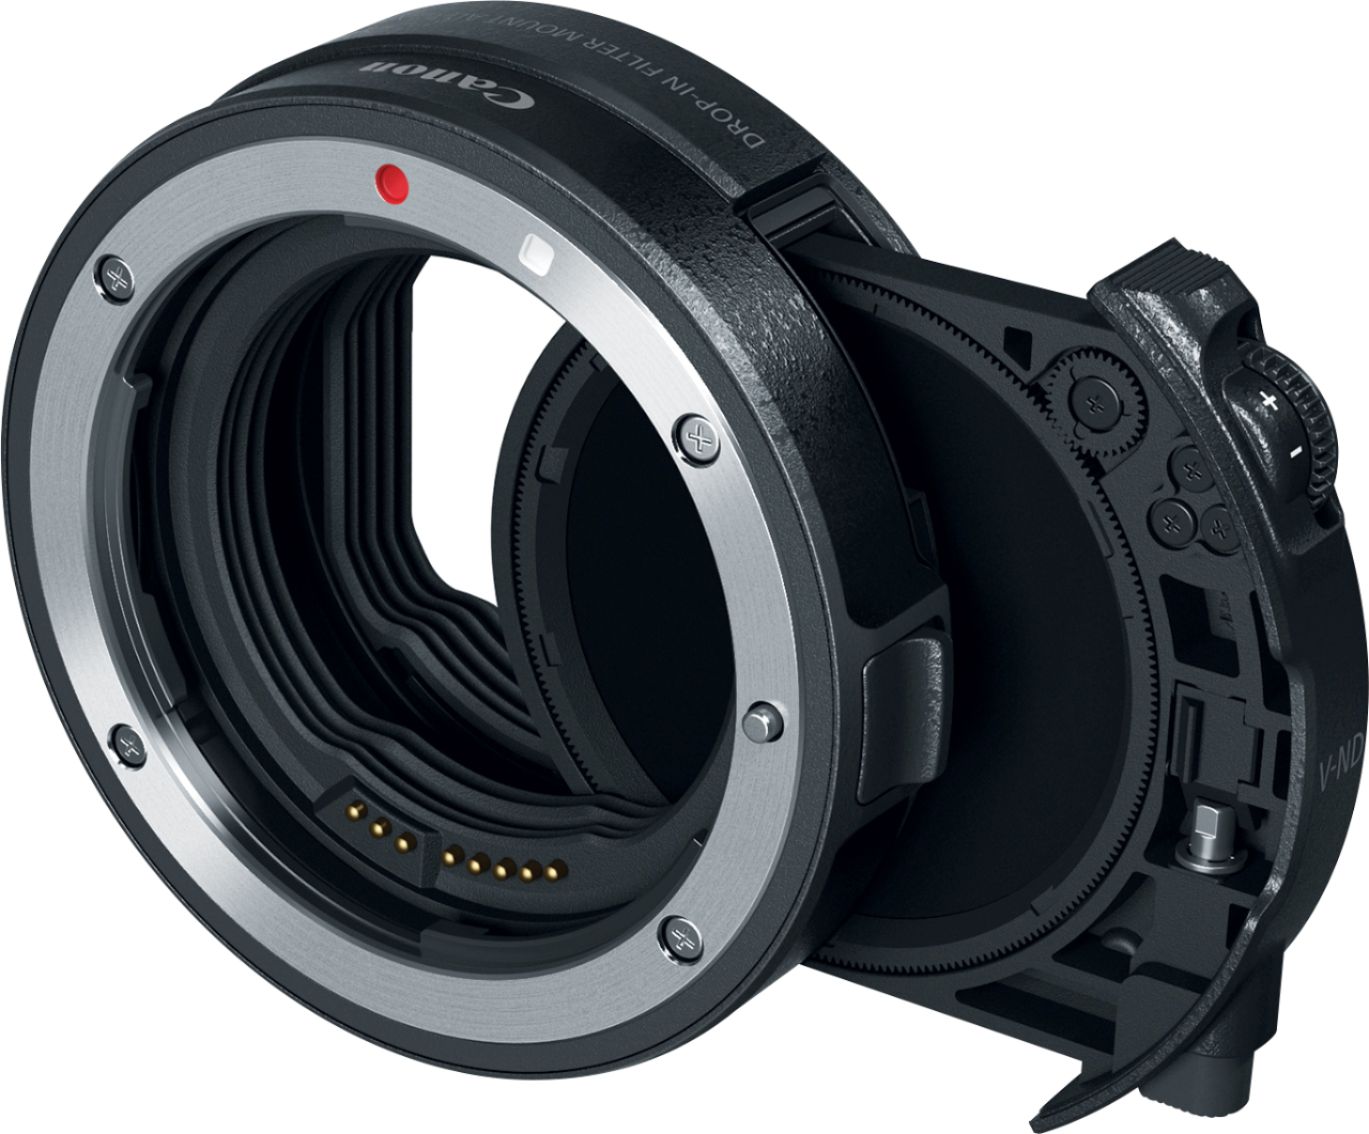 Canon EF-EOS R5, EOS R6, EOS R and EOS RP Drop-In Filter Lens Mount